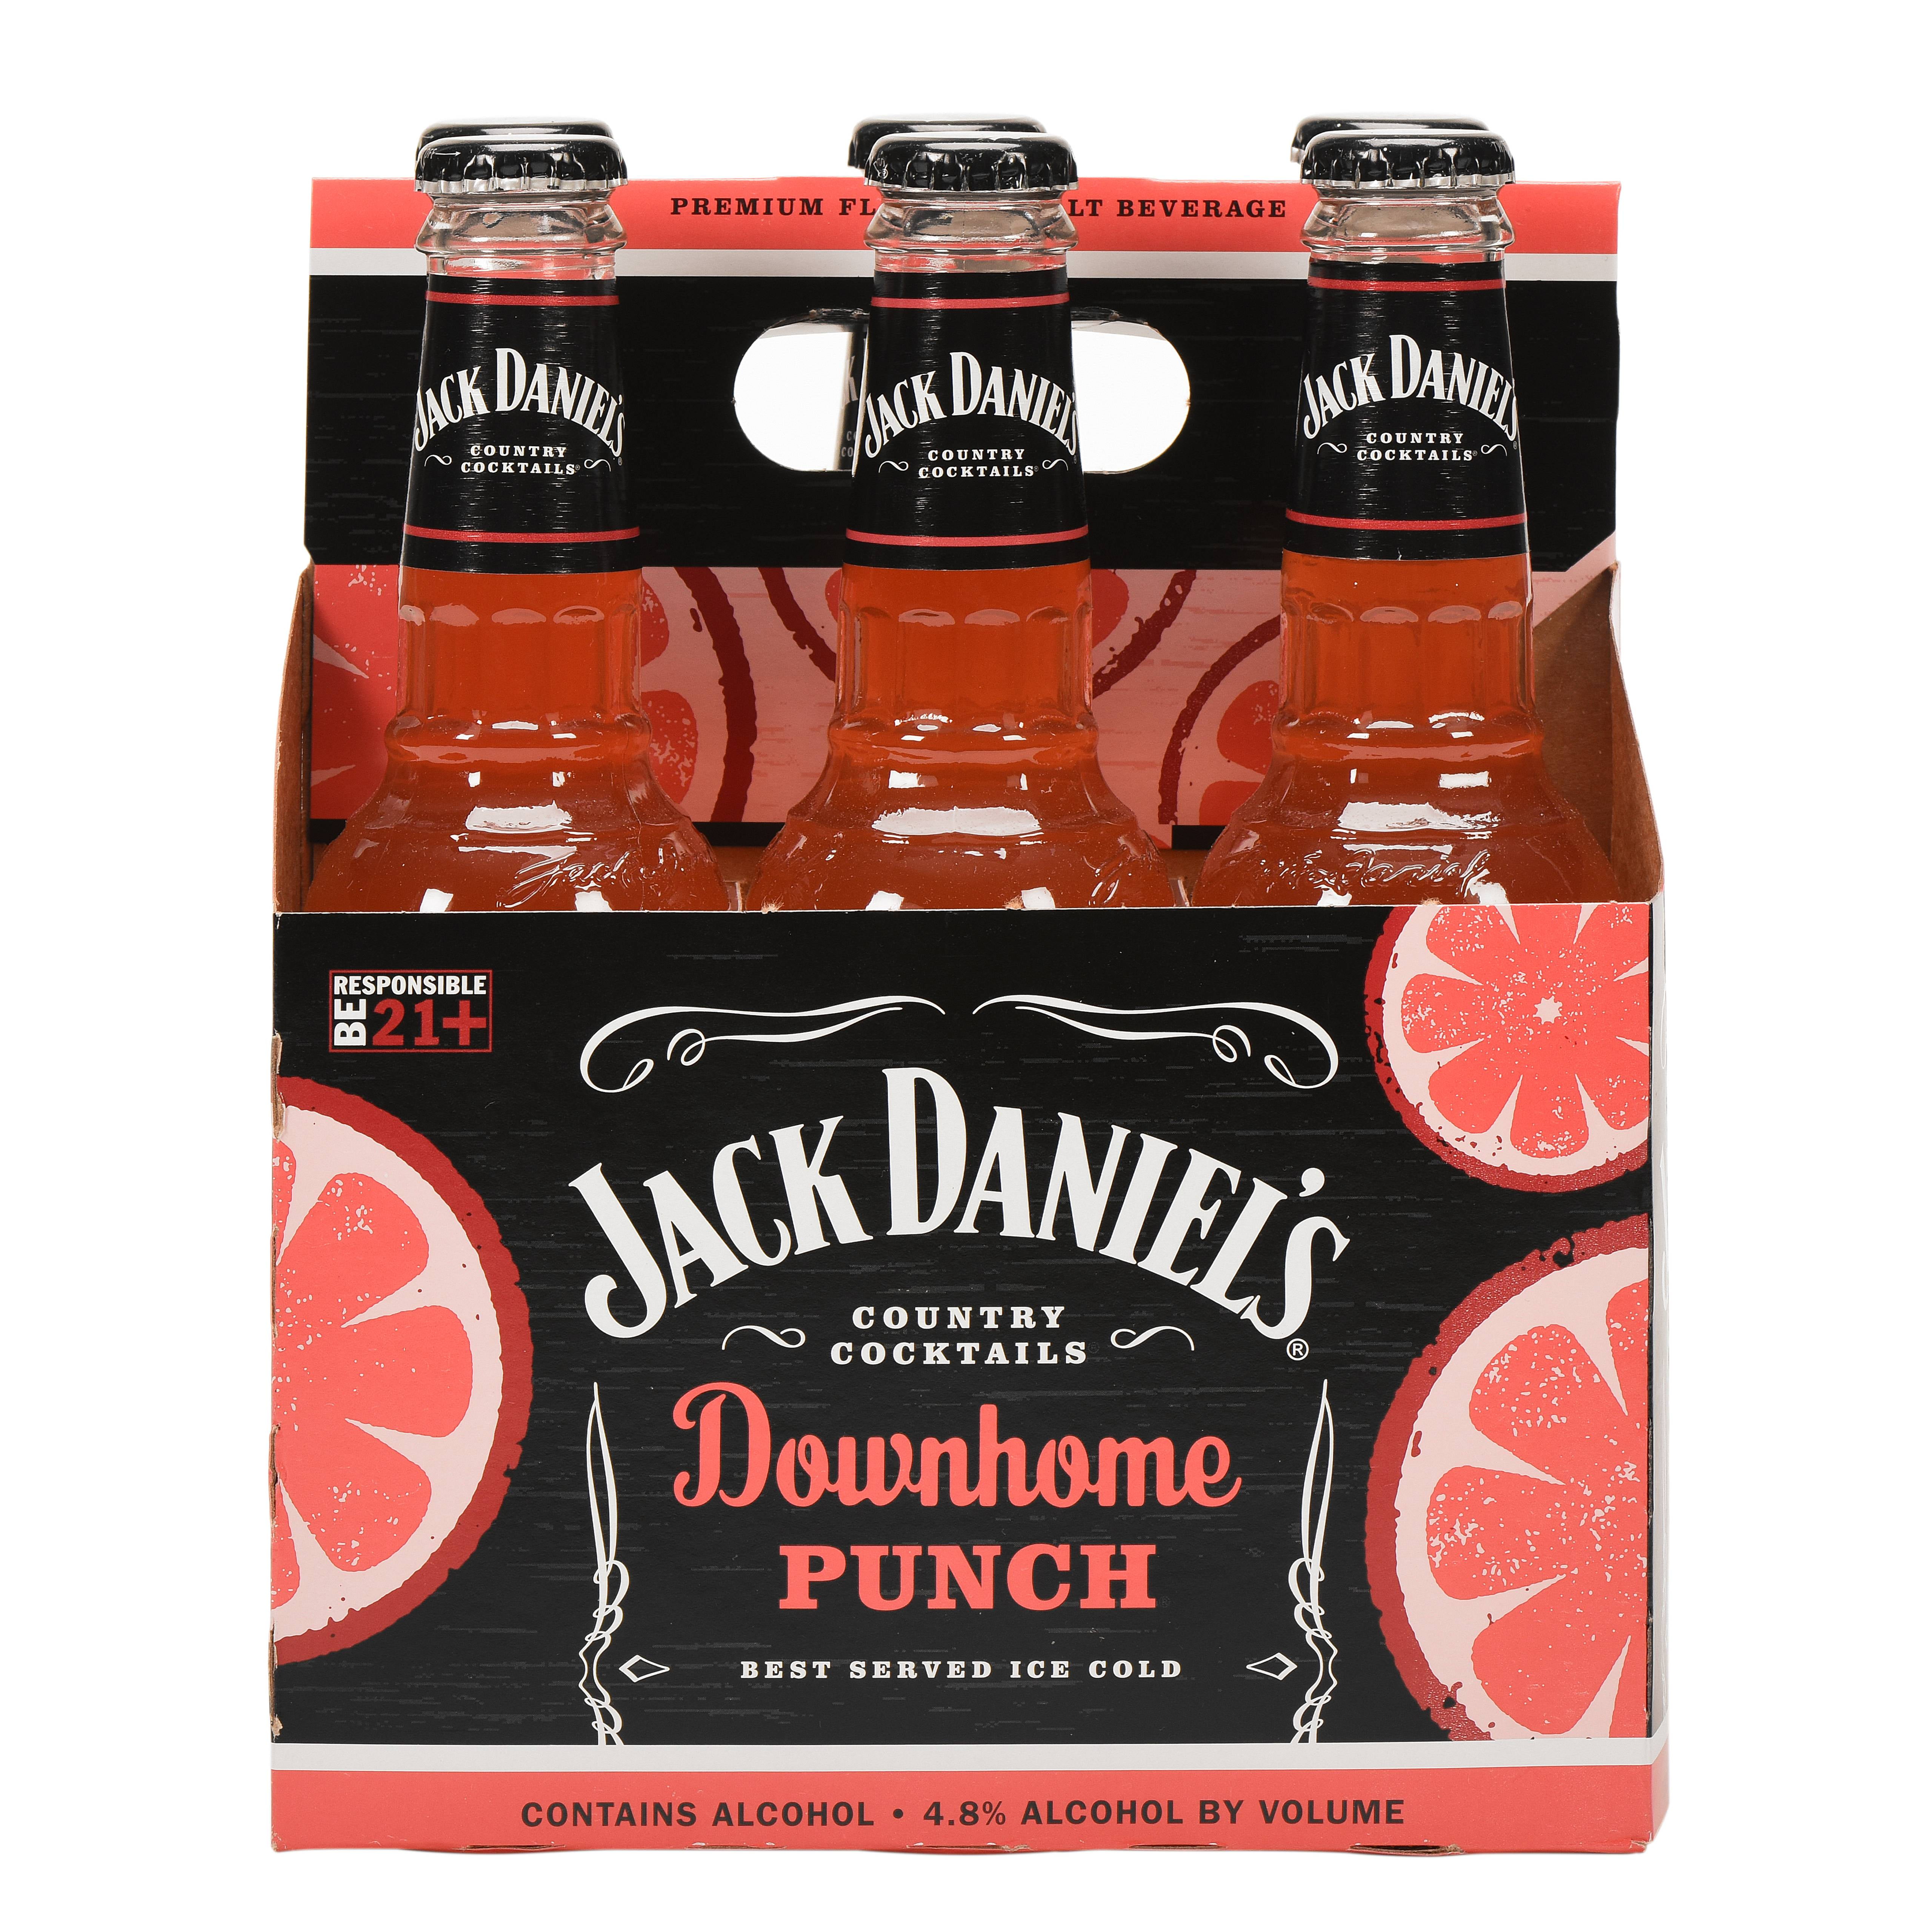 Jack Daniel's Country Cocktails Downhome Punch, 6 pack, 10 fl oz - Walmart.com - Walmart.com